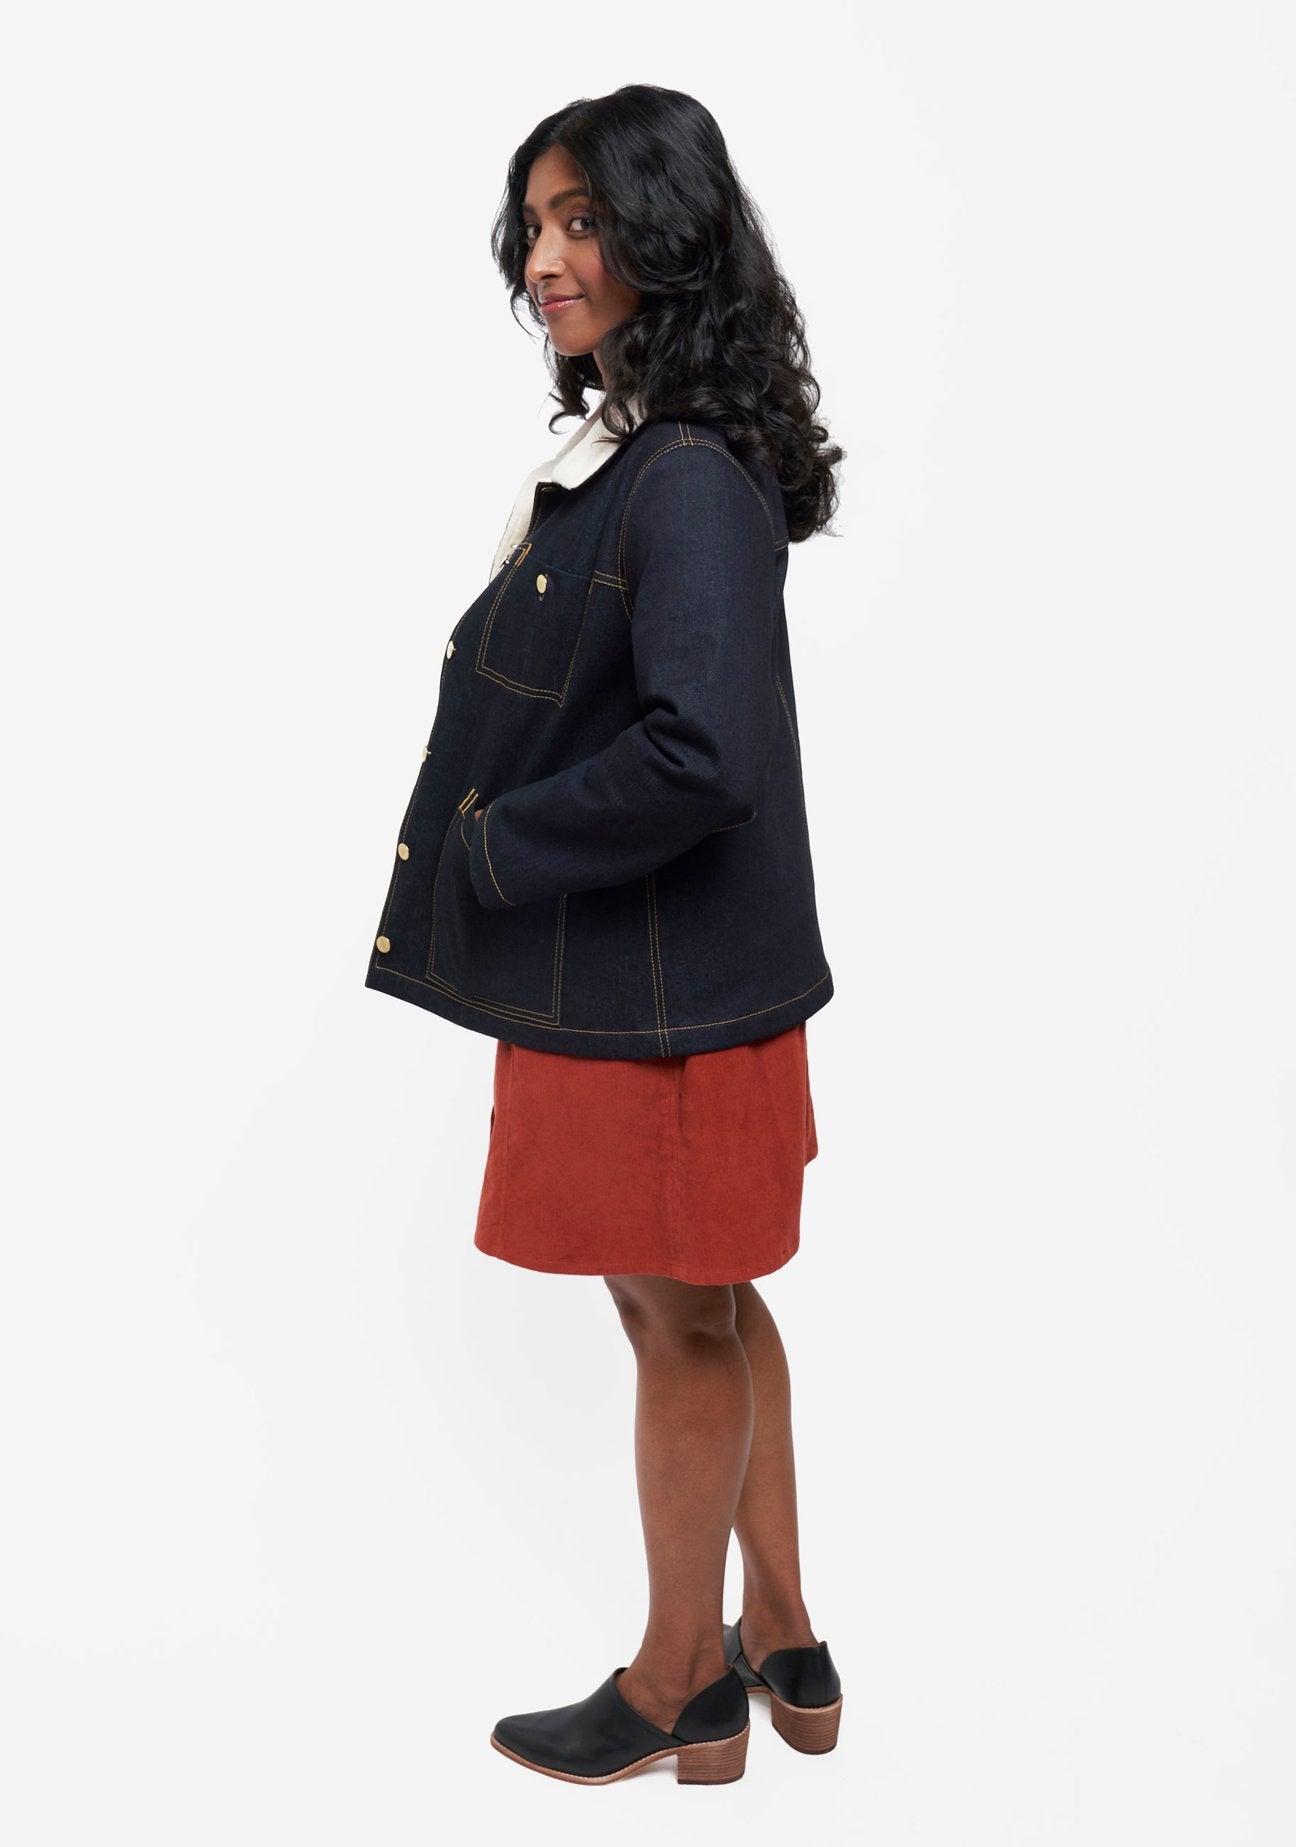 The Thayer Jacket Pattern - Size 0-18 - Grainline Studio